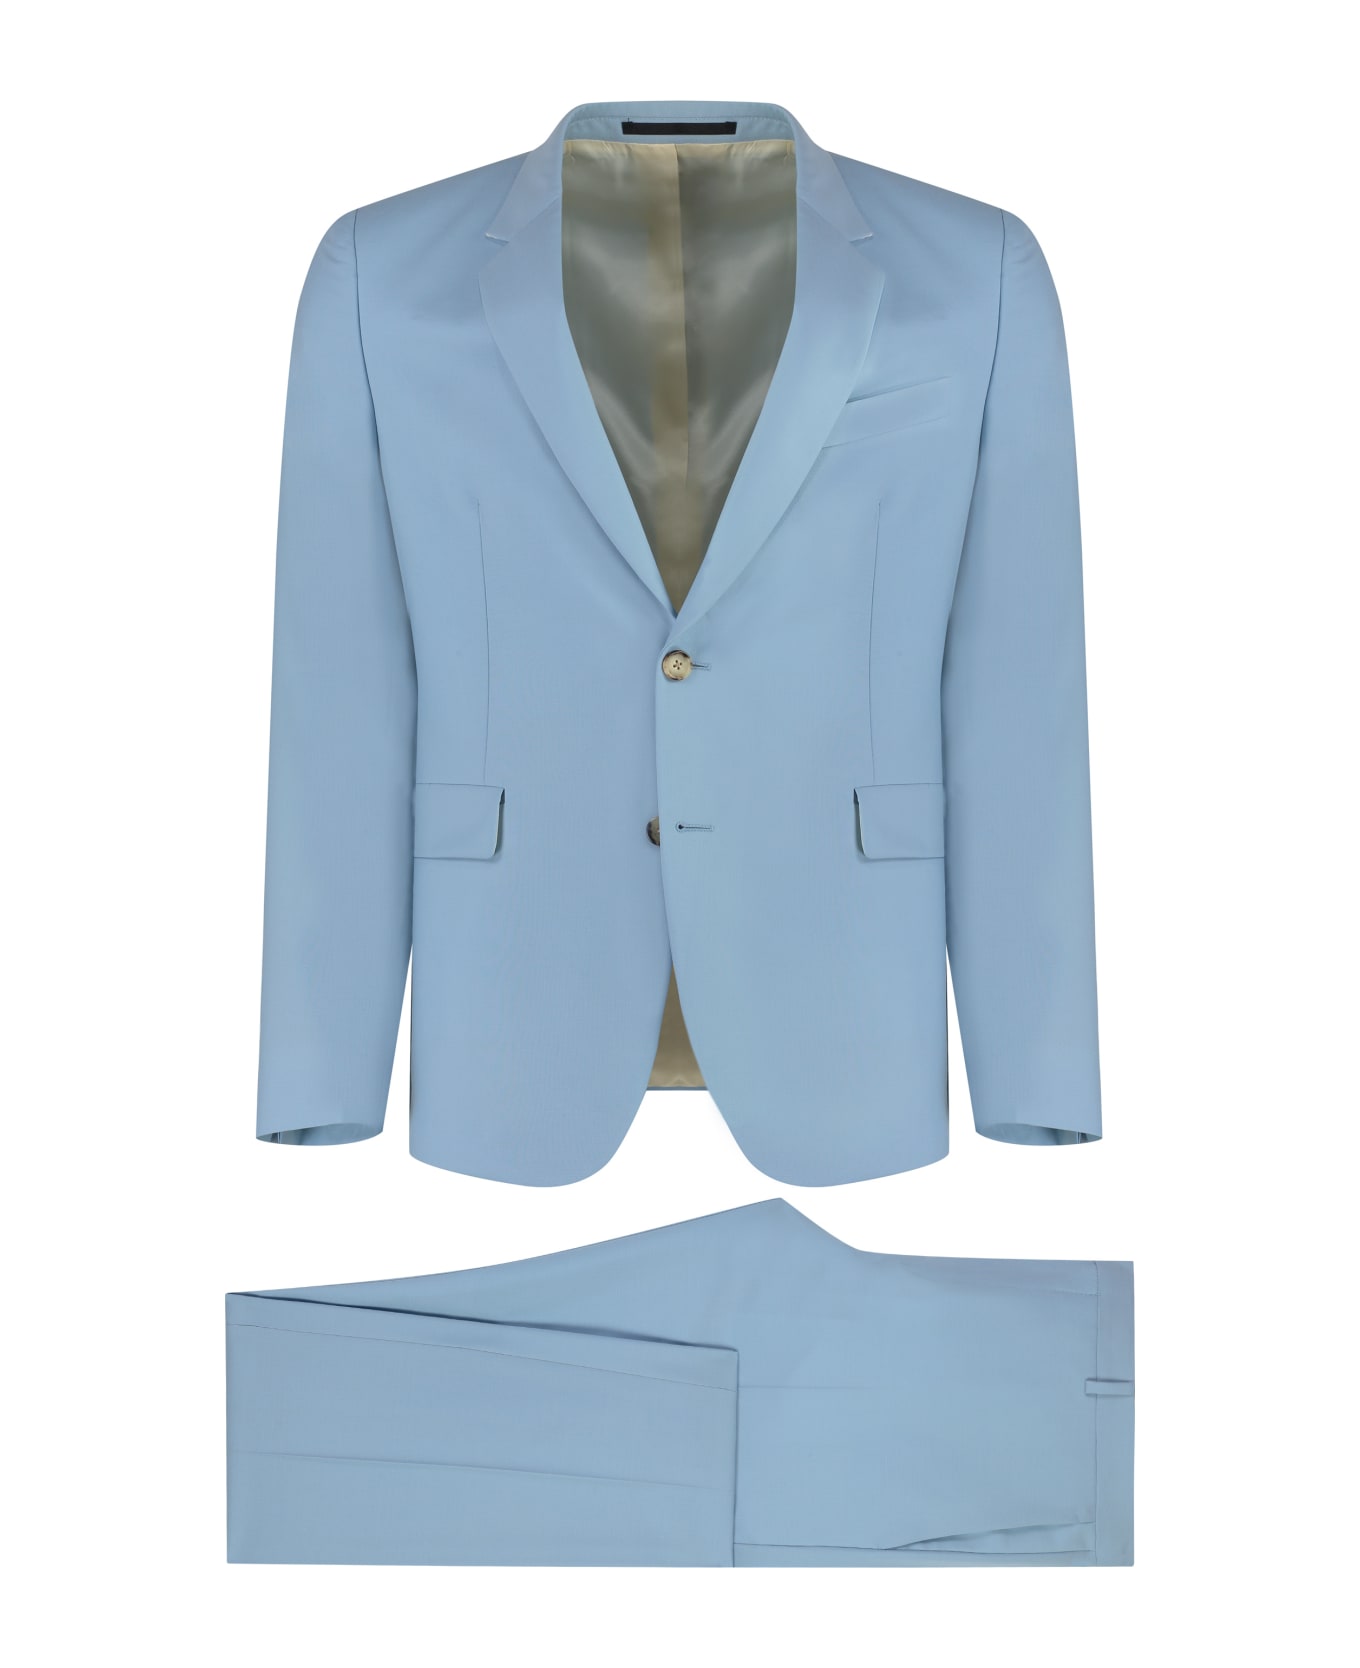 Paul Smith Two Piece Suit - Light Blue